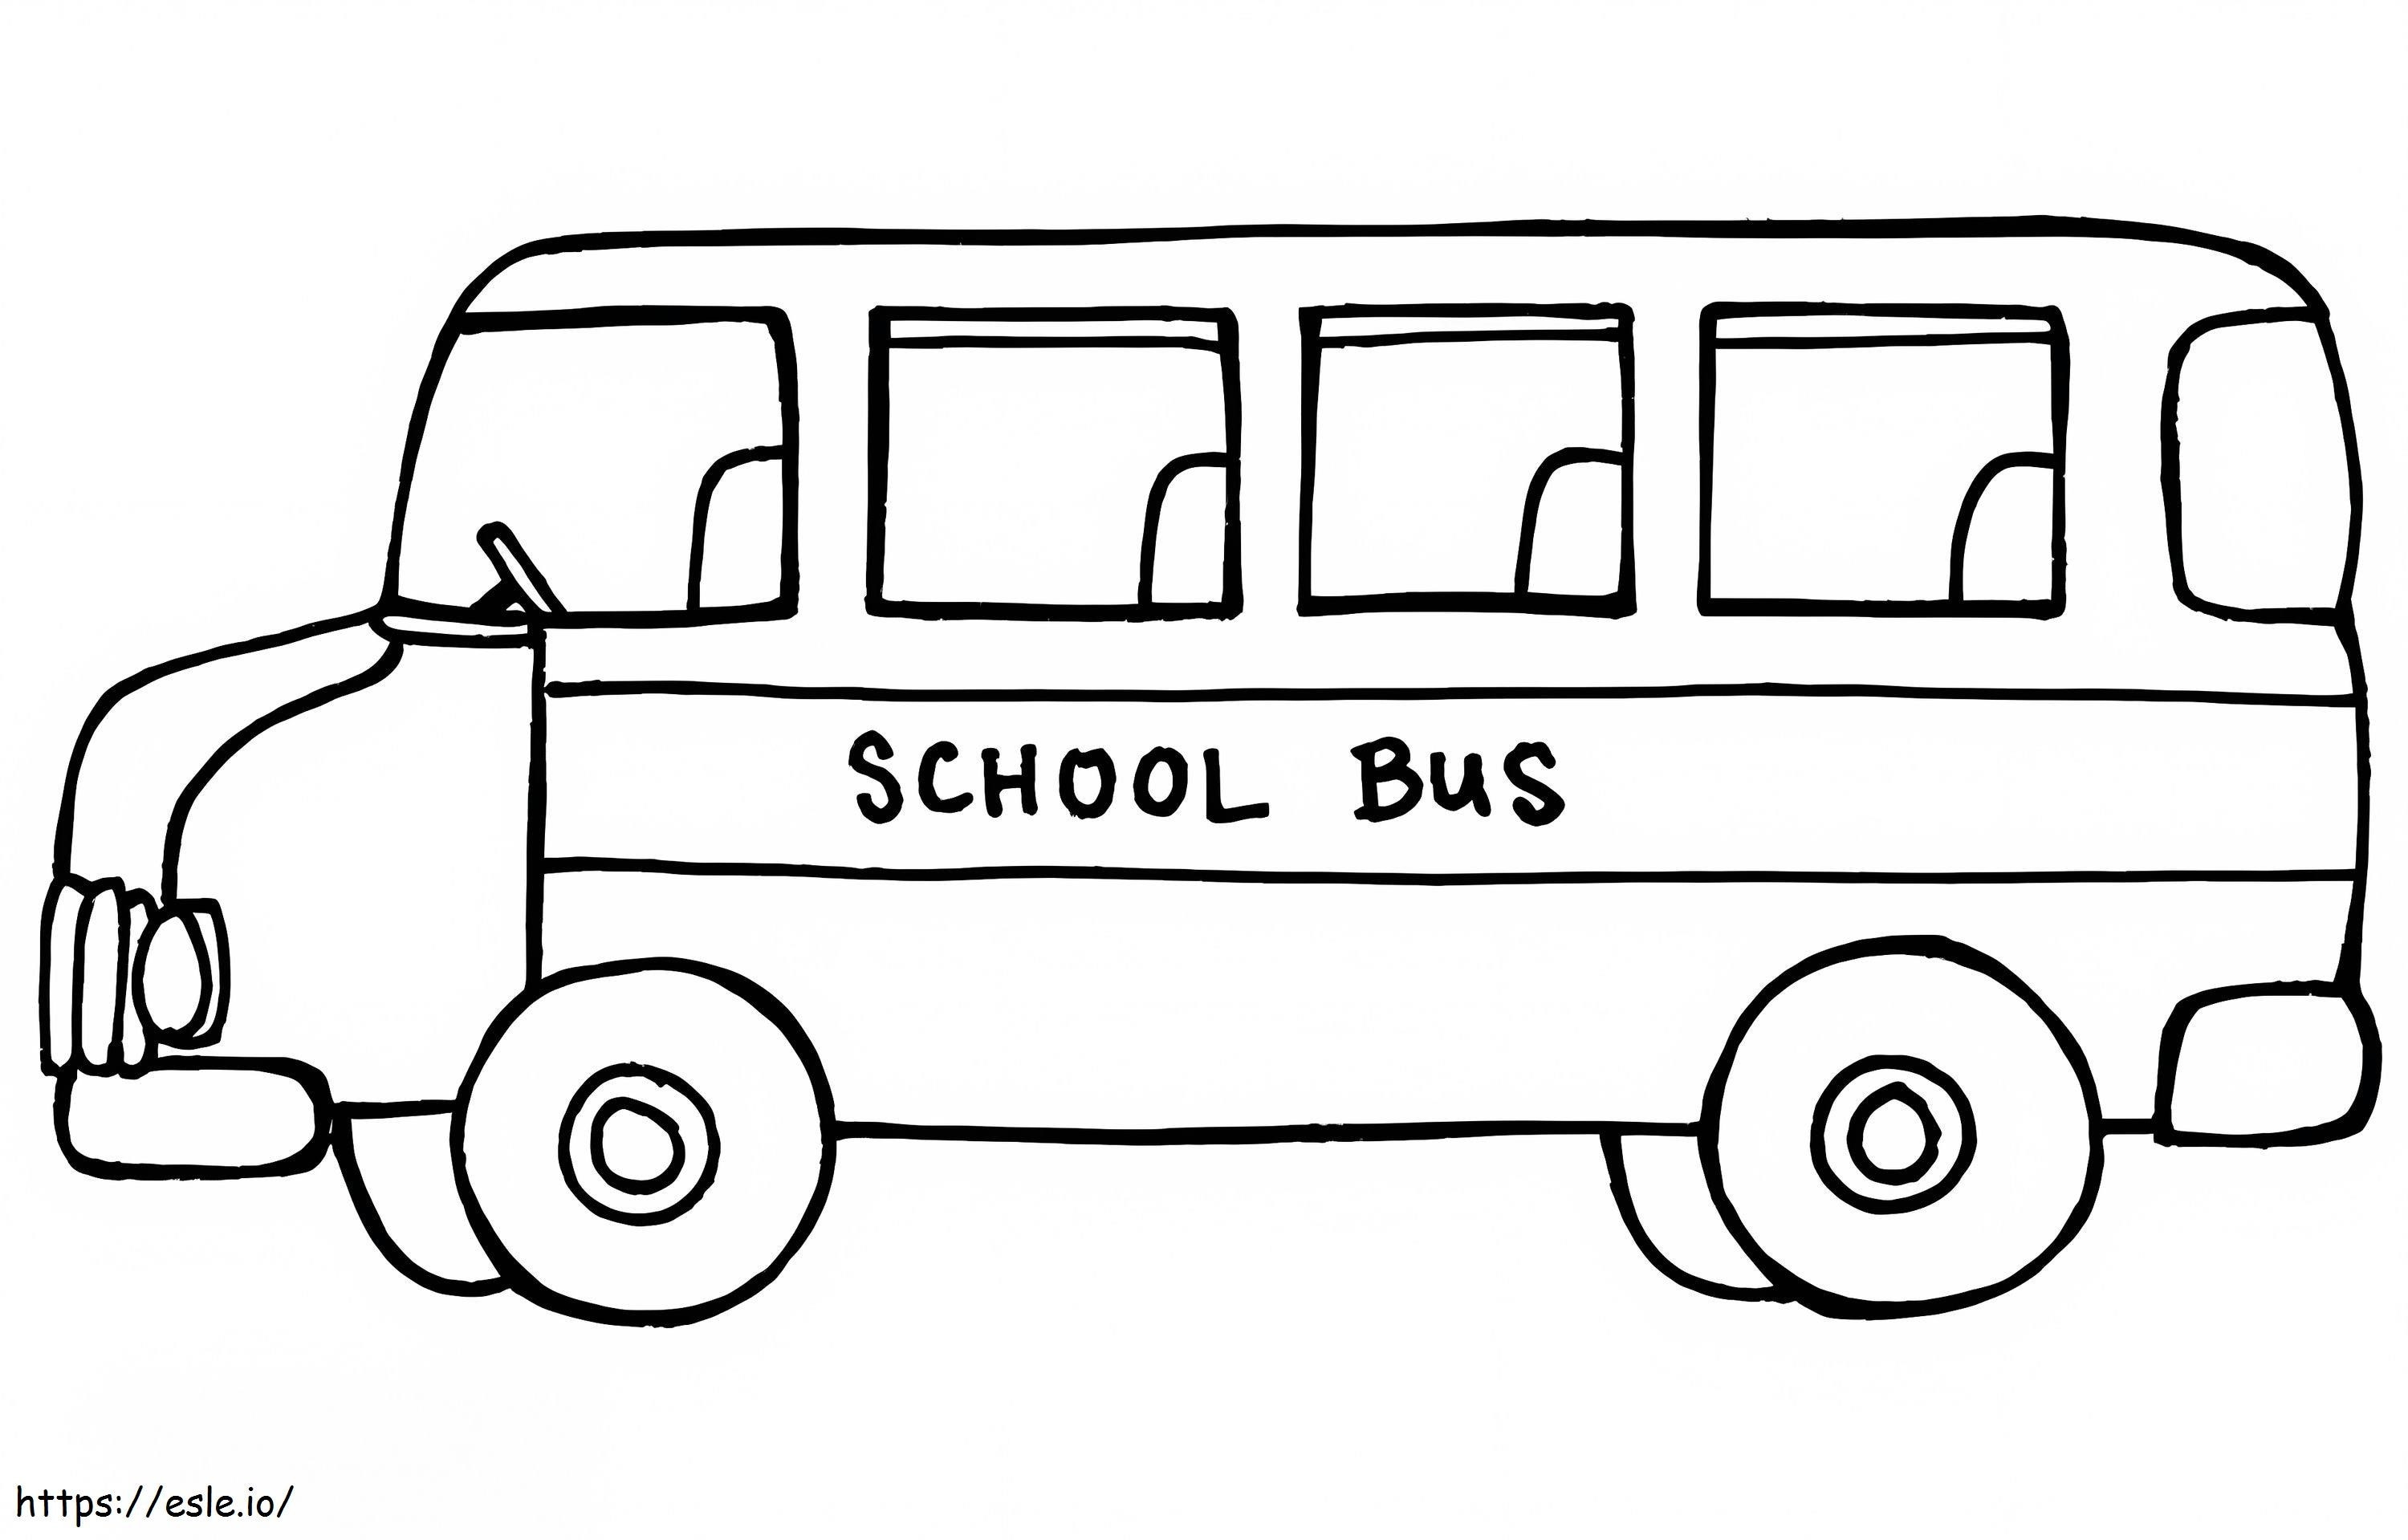 Sally School Bus coloring page